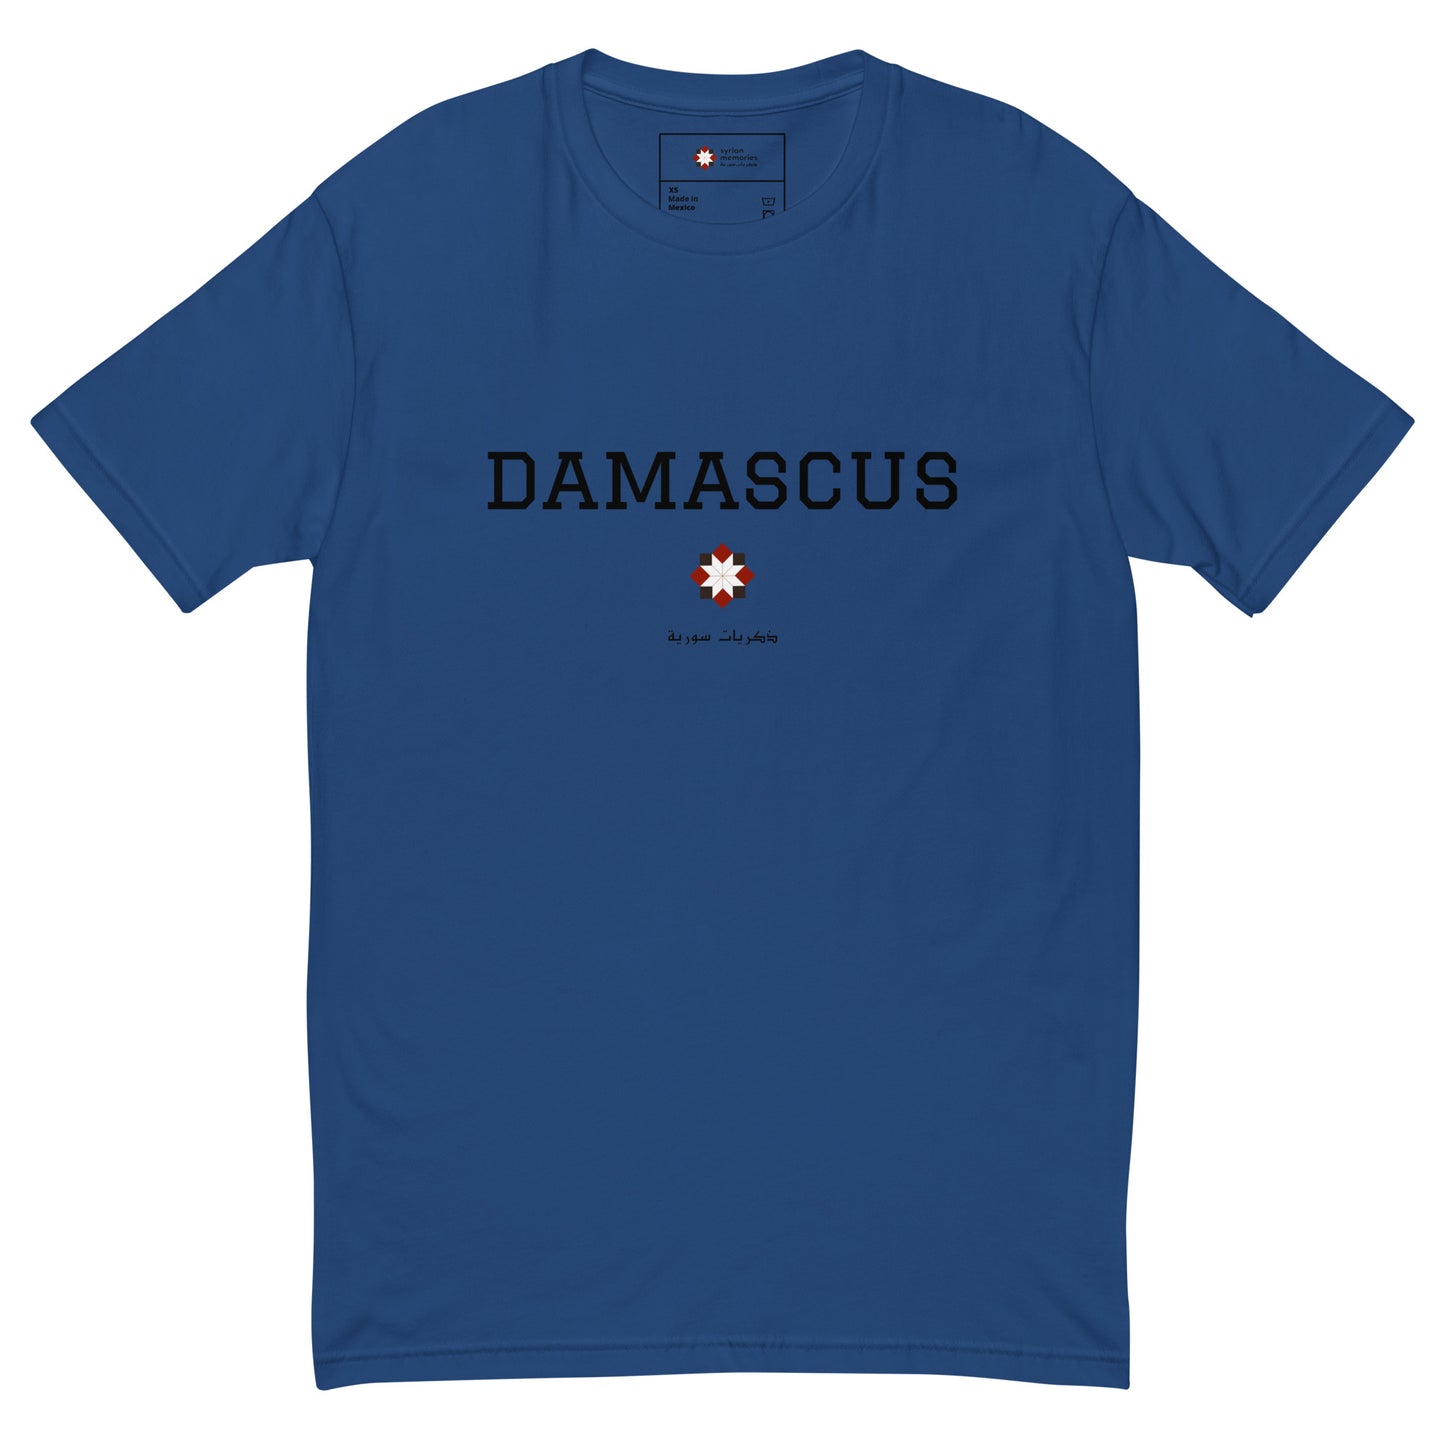 Damascus - University Collection - Cotton T-shirt